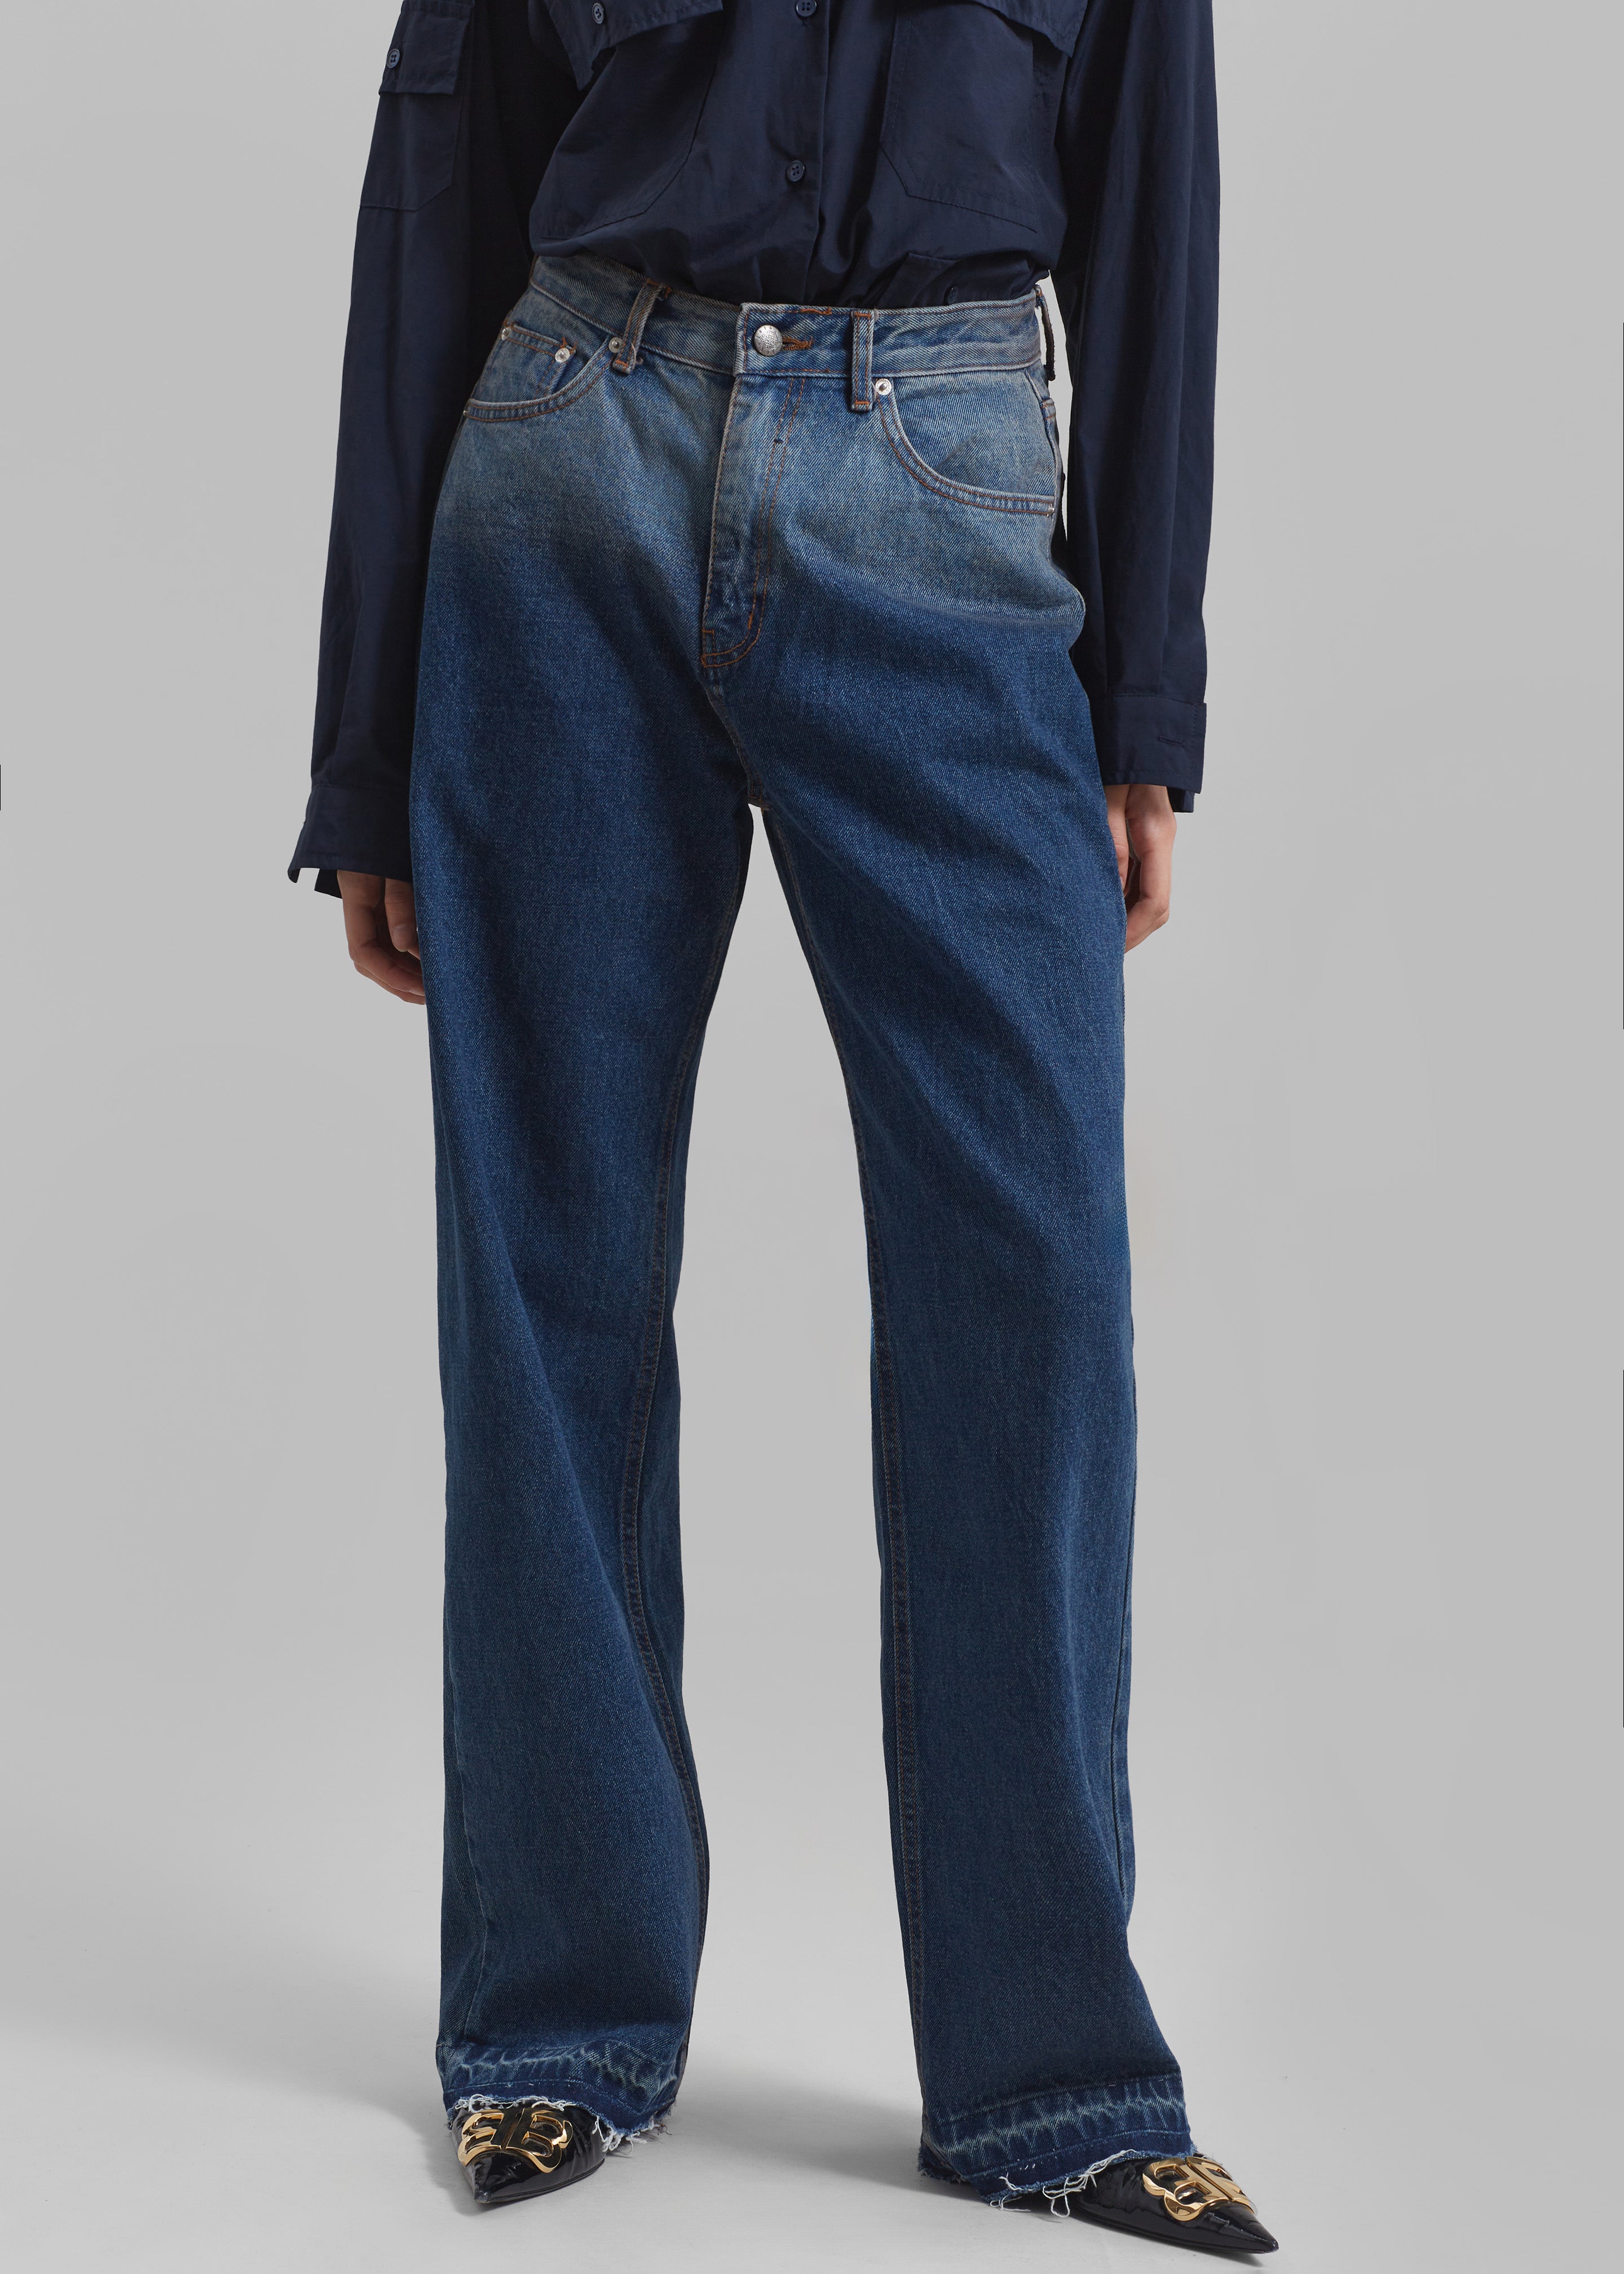 Myla Ombre Jeans - Medium Wash - 4